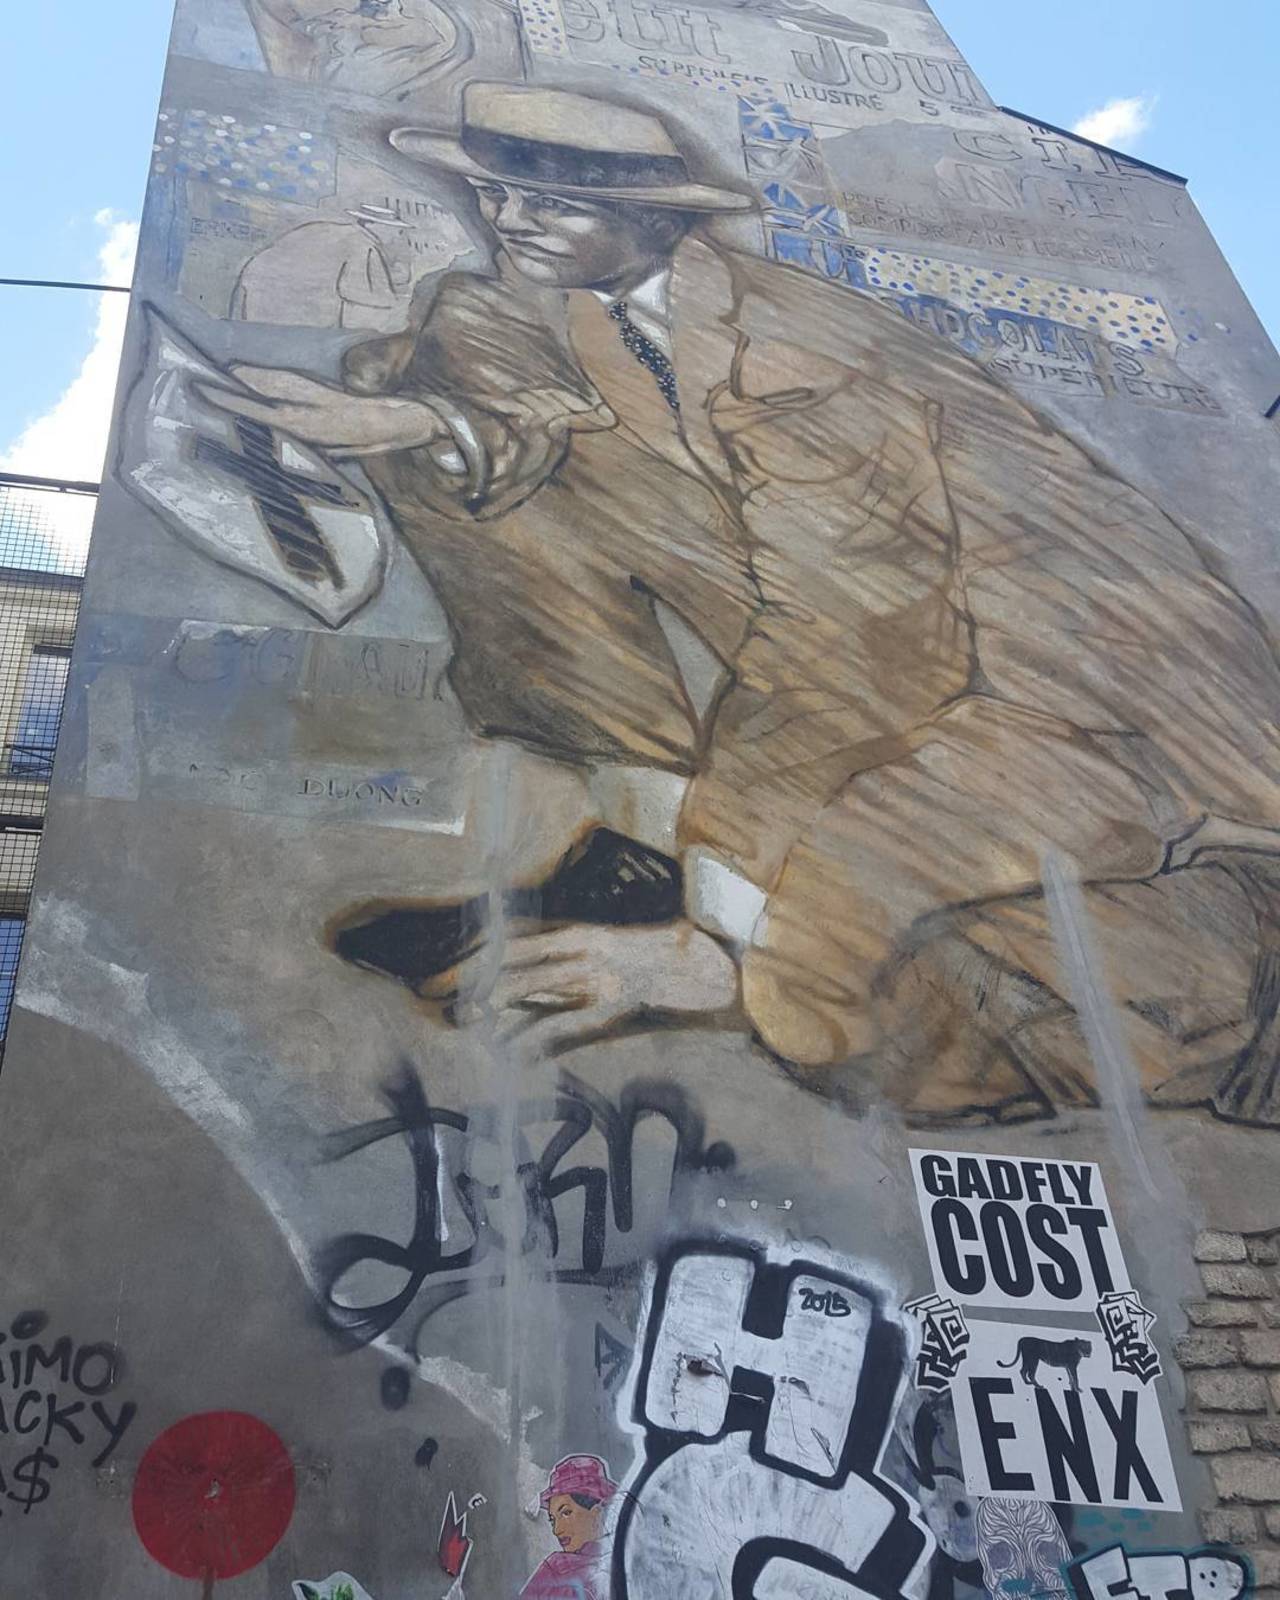 #Paris #graffiti photo by @jdewey67 http://ift.tt/1LFGRwe #StreetArt http://t.co/XEmfIhK7vR